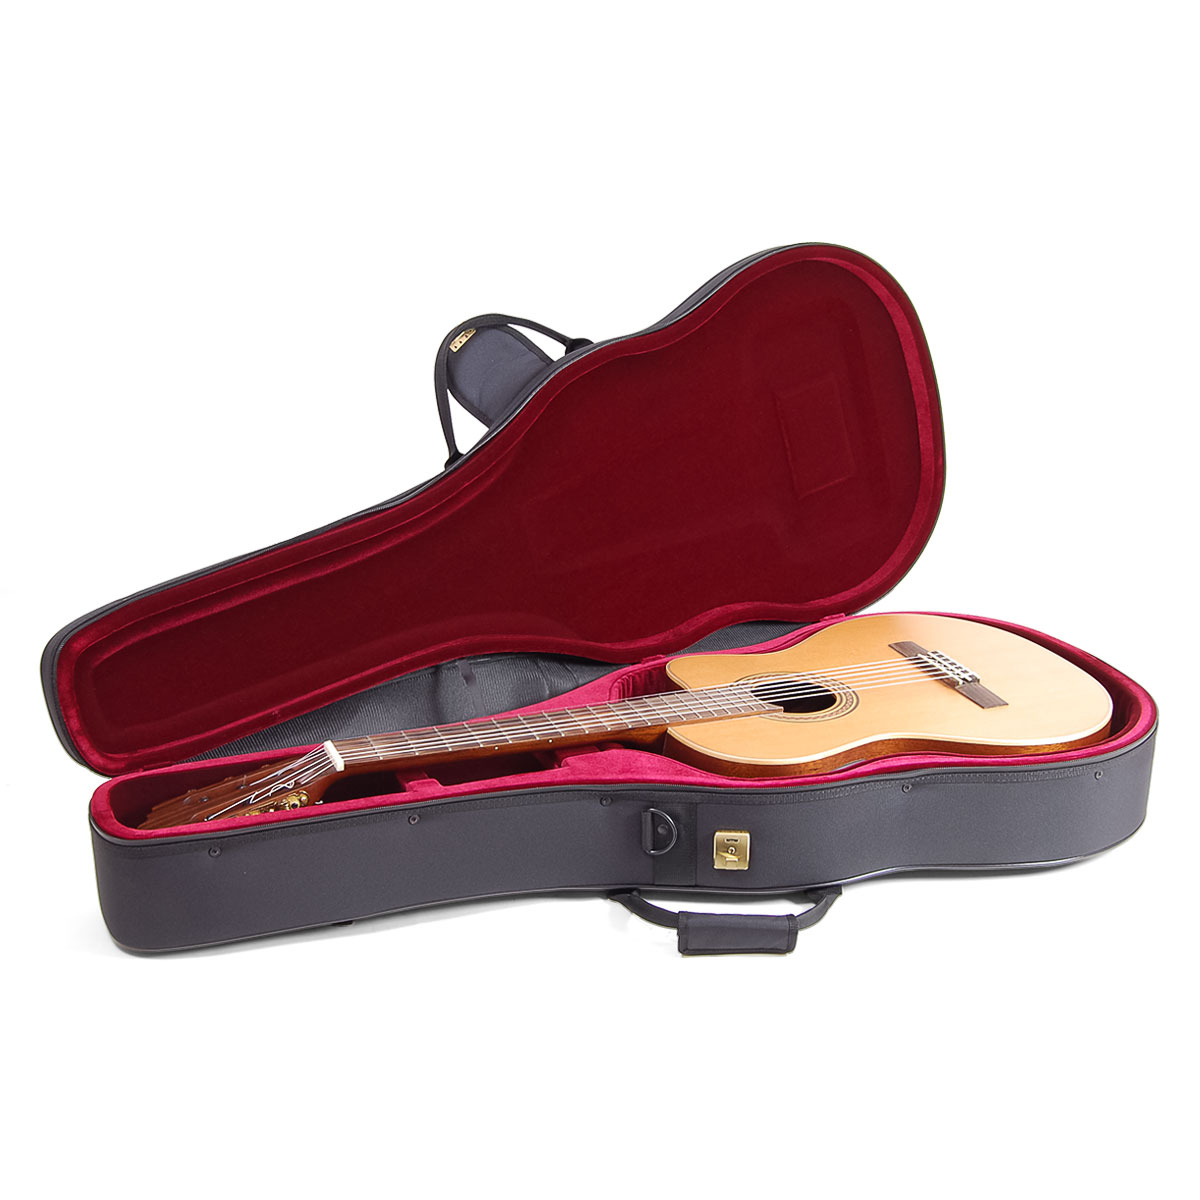 7/8 guitar case SuperLight - with guitar